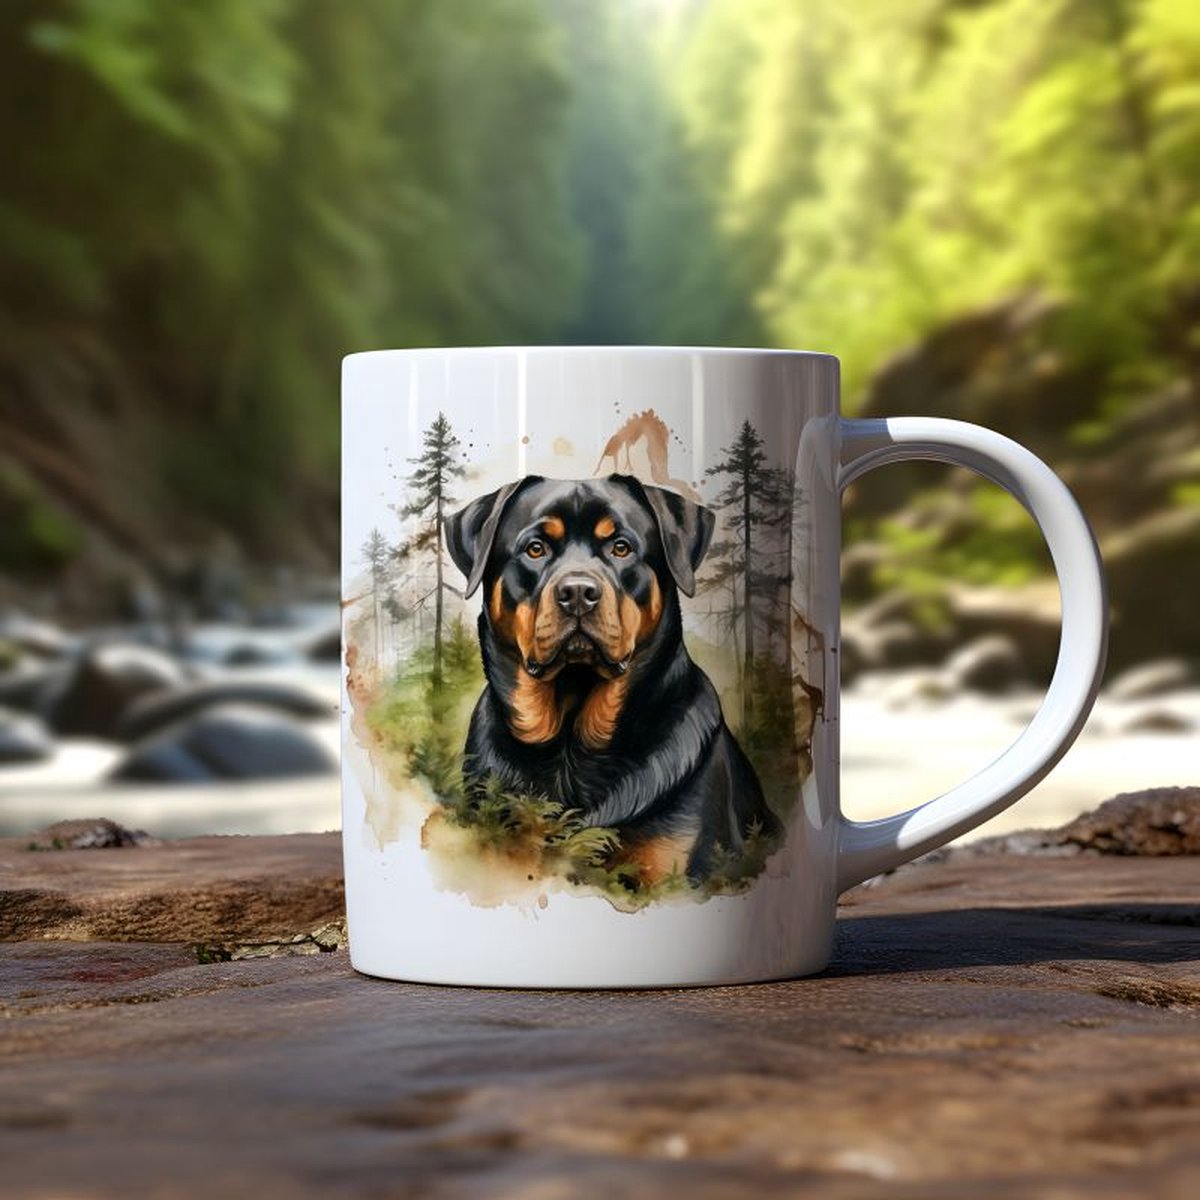 Mok Rottweiler Beker voor koffie of tas voor thee, cadeau voor dierenliefhebbers, moeder, vader, collega, vriend, vriendin, kantoor